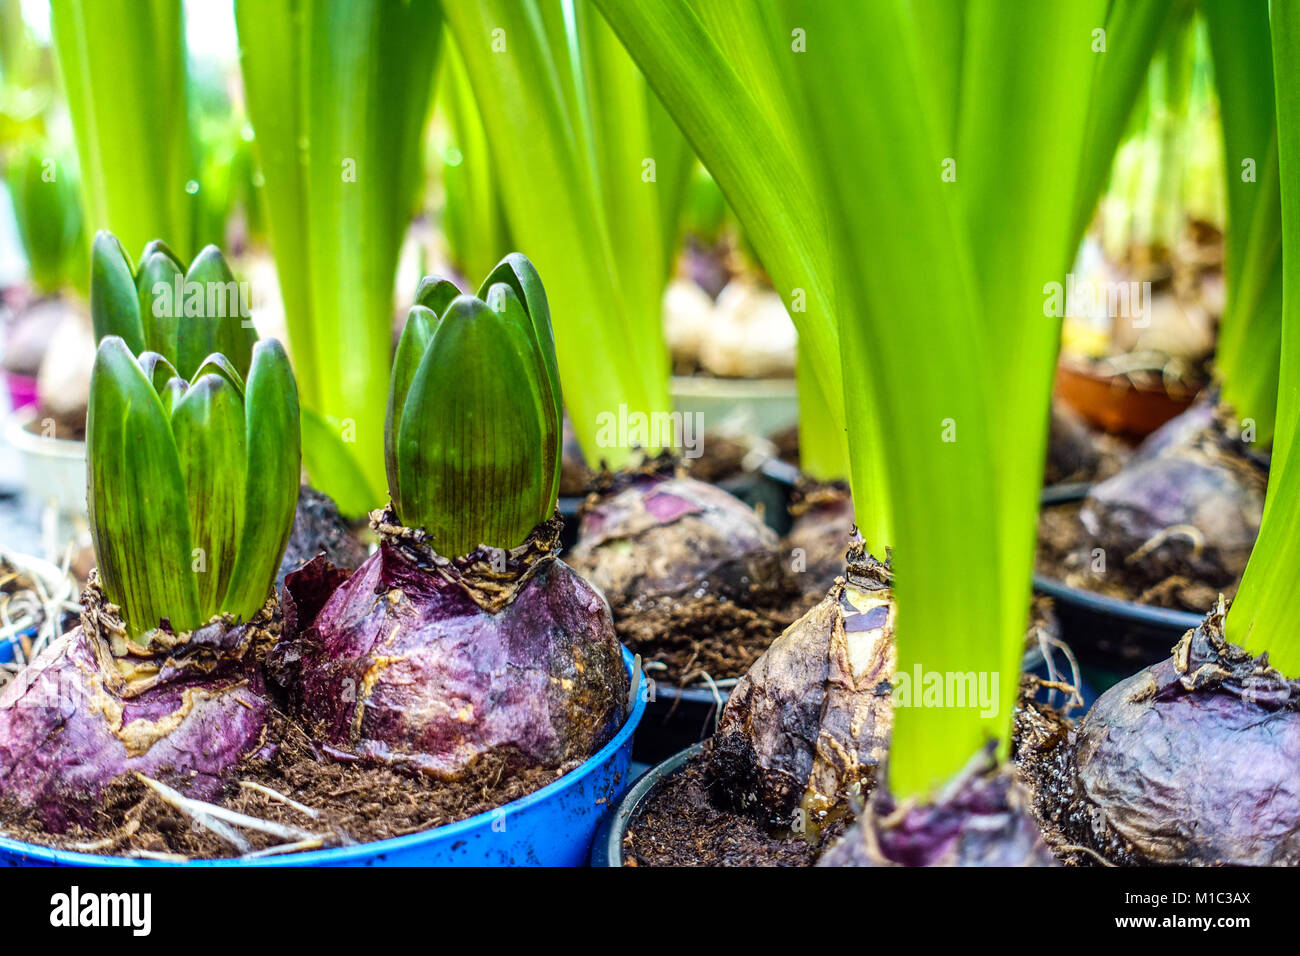 The budding Hyacinth bulbs in flower pots Stock Photo